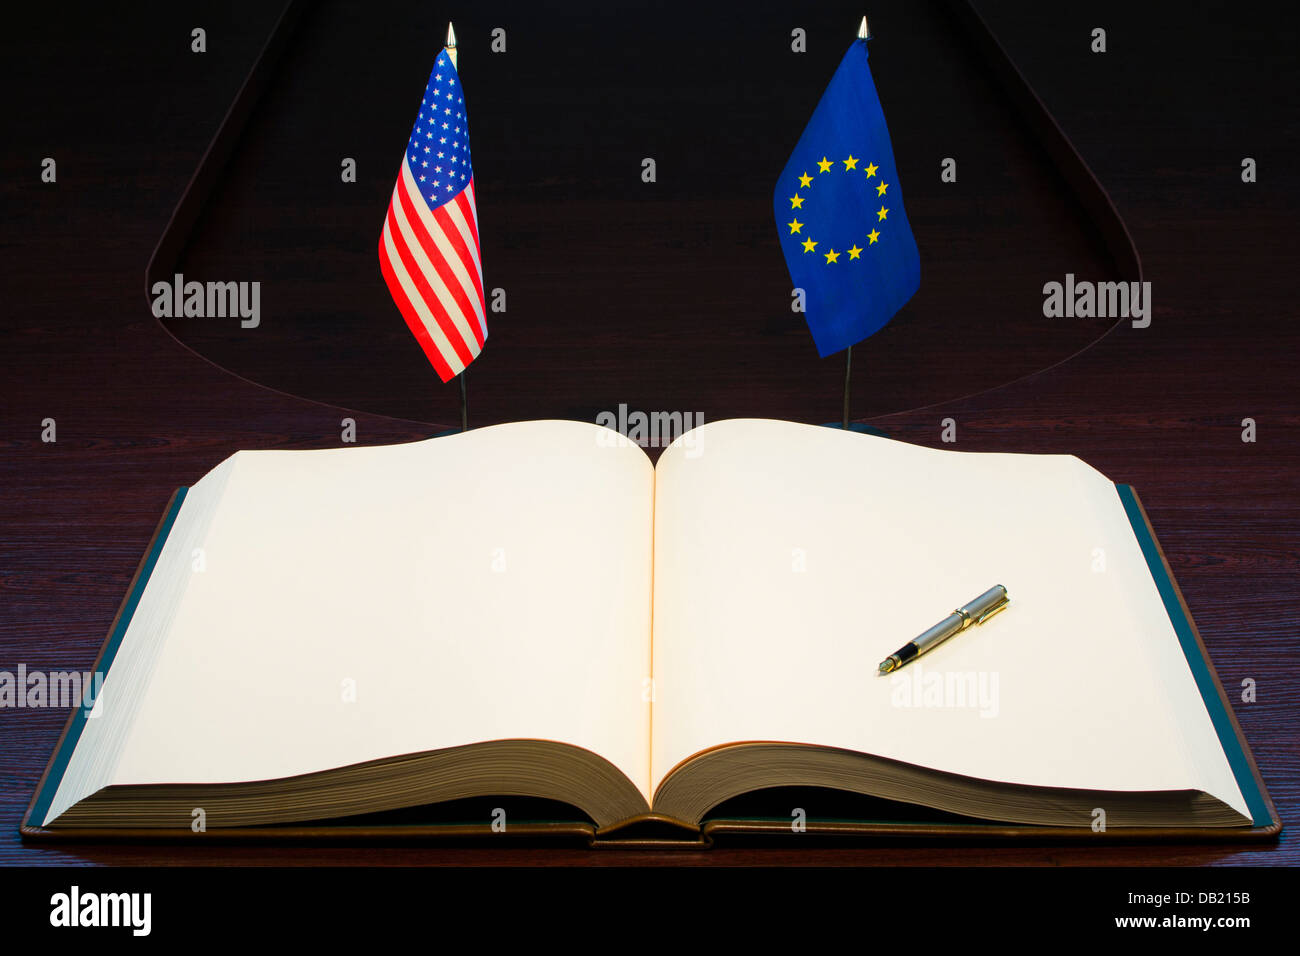 European Union (EU) - USA relations concept. Stock Photo